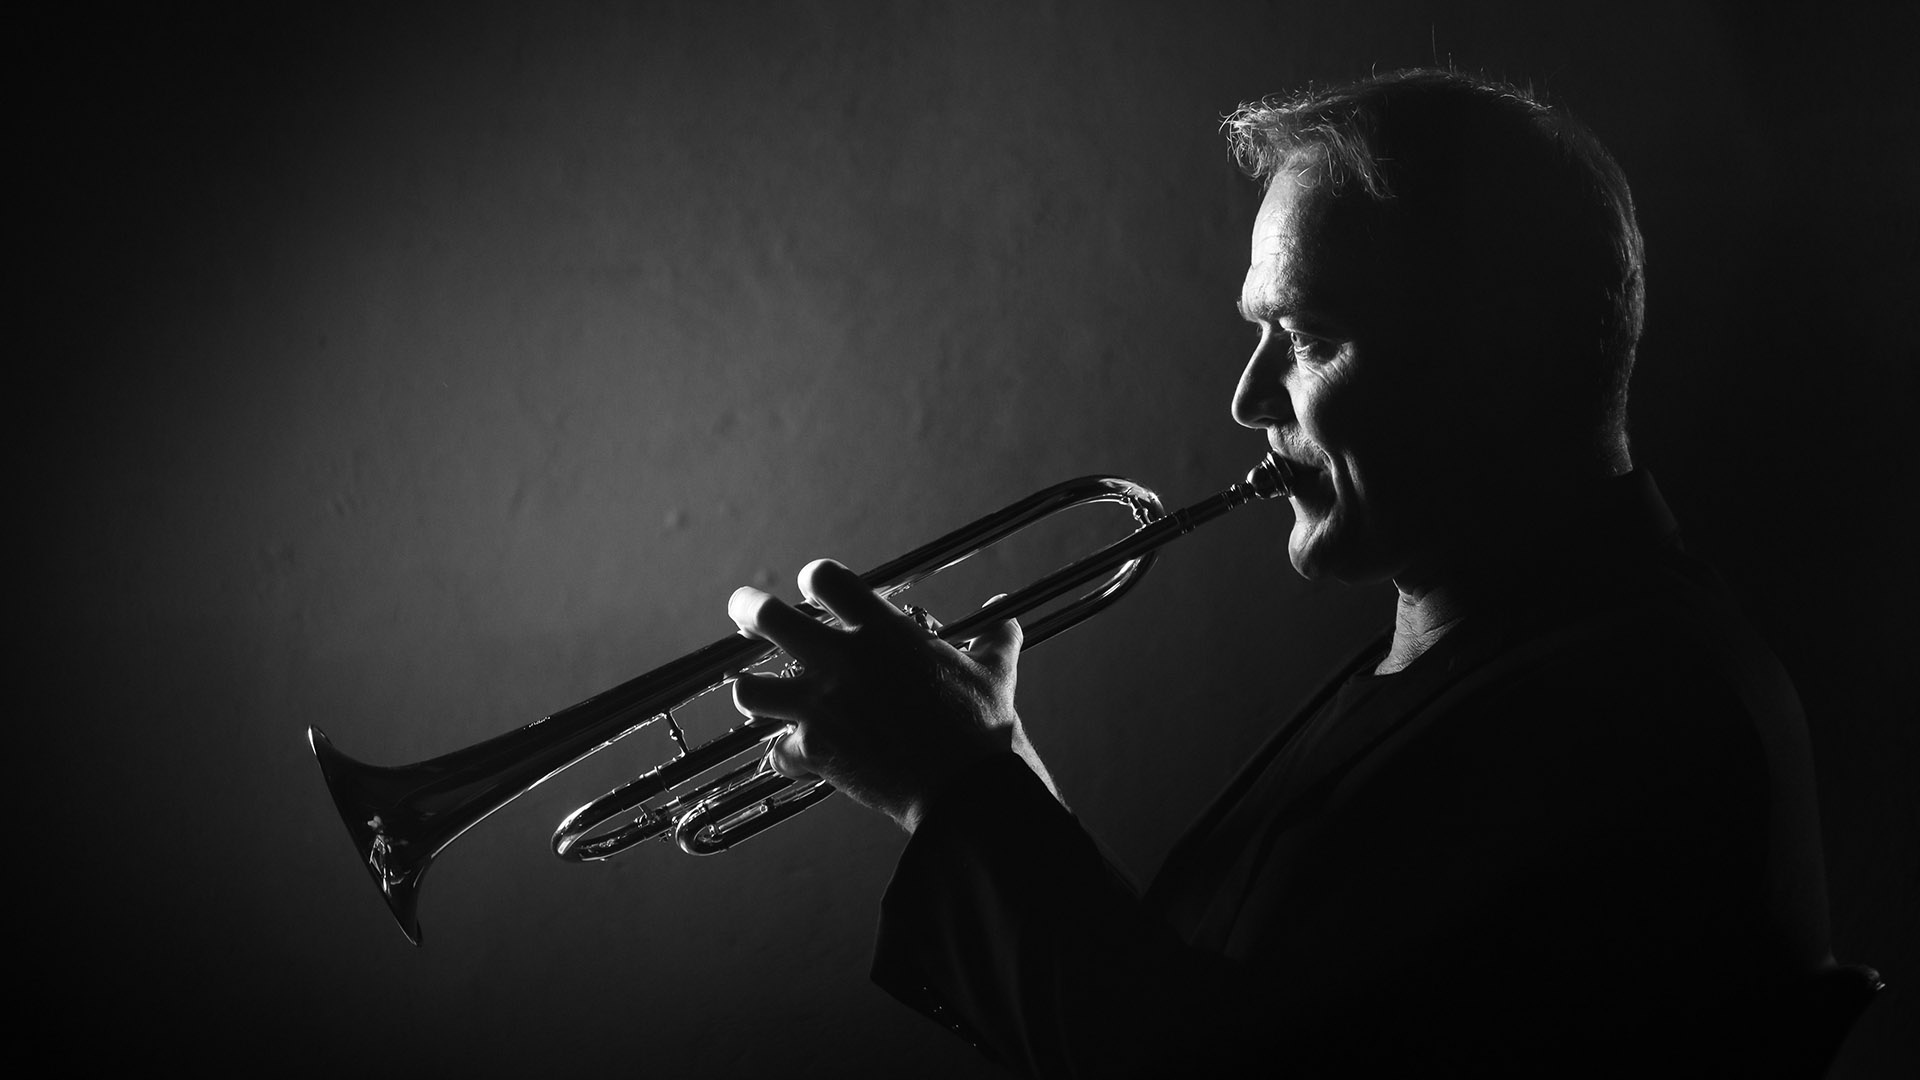 Trumpet: Gabor Tarkovi, The Berlin Philharmonic Brass Trio, Professor for Trumpet at the Berlin University of the Arts. 1920x1080 Full HD Background.